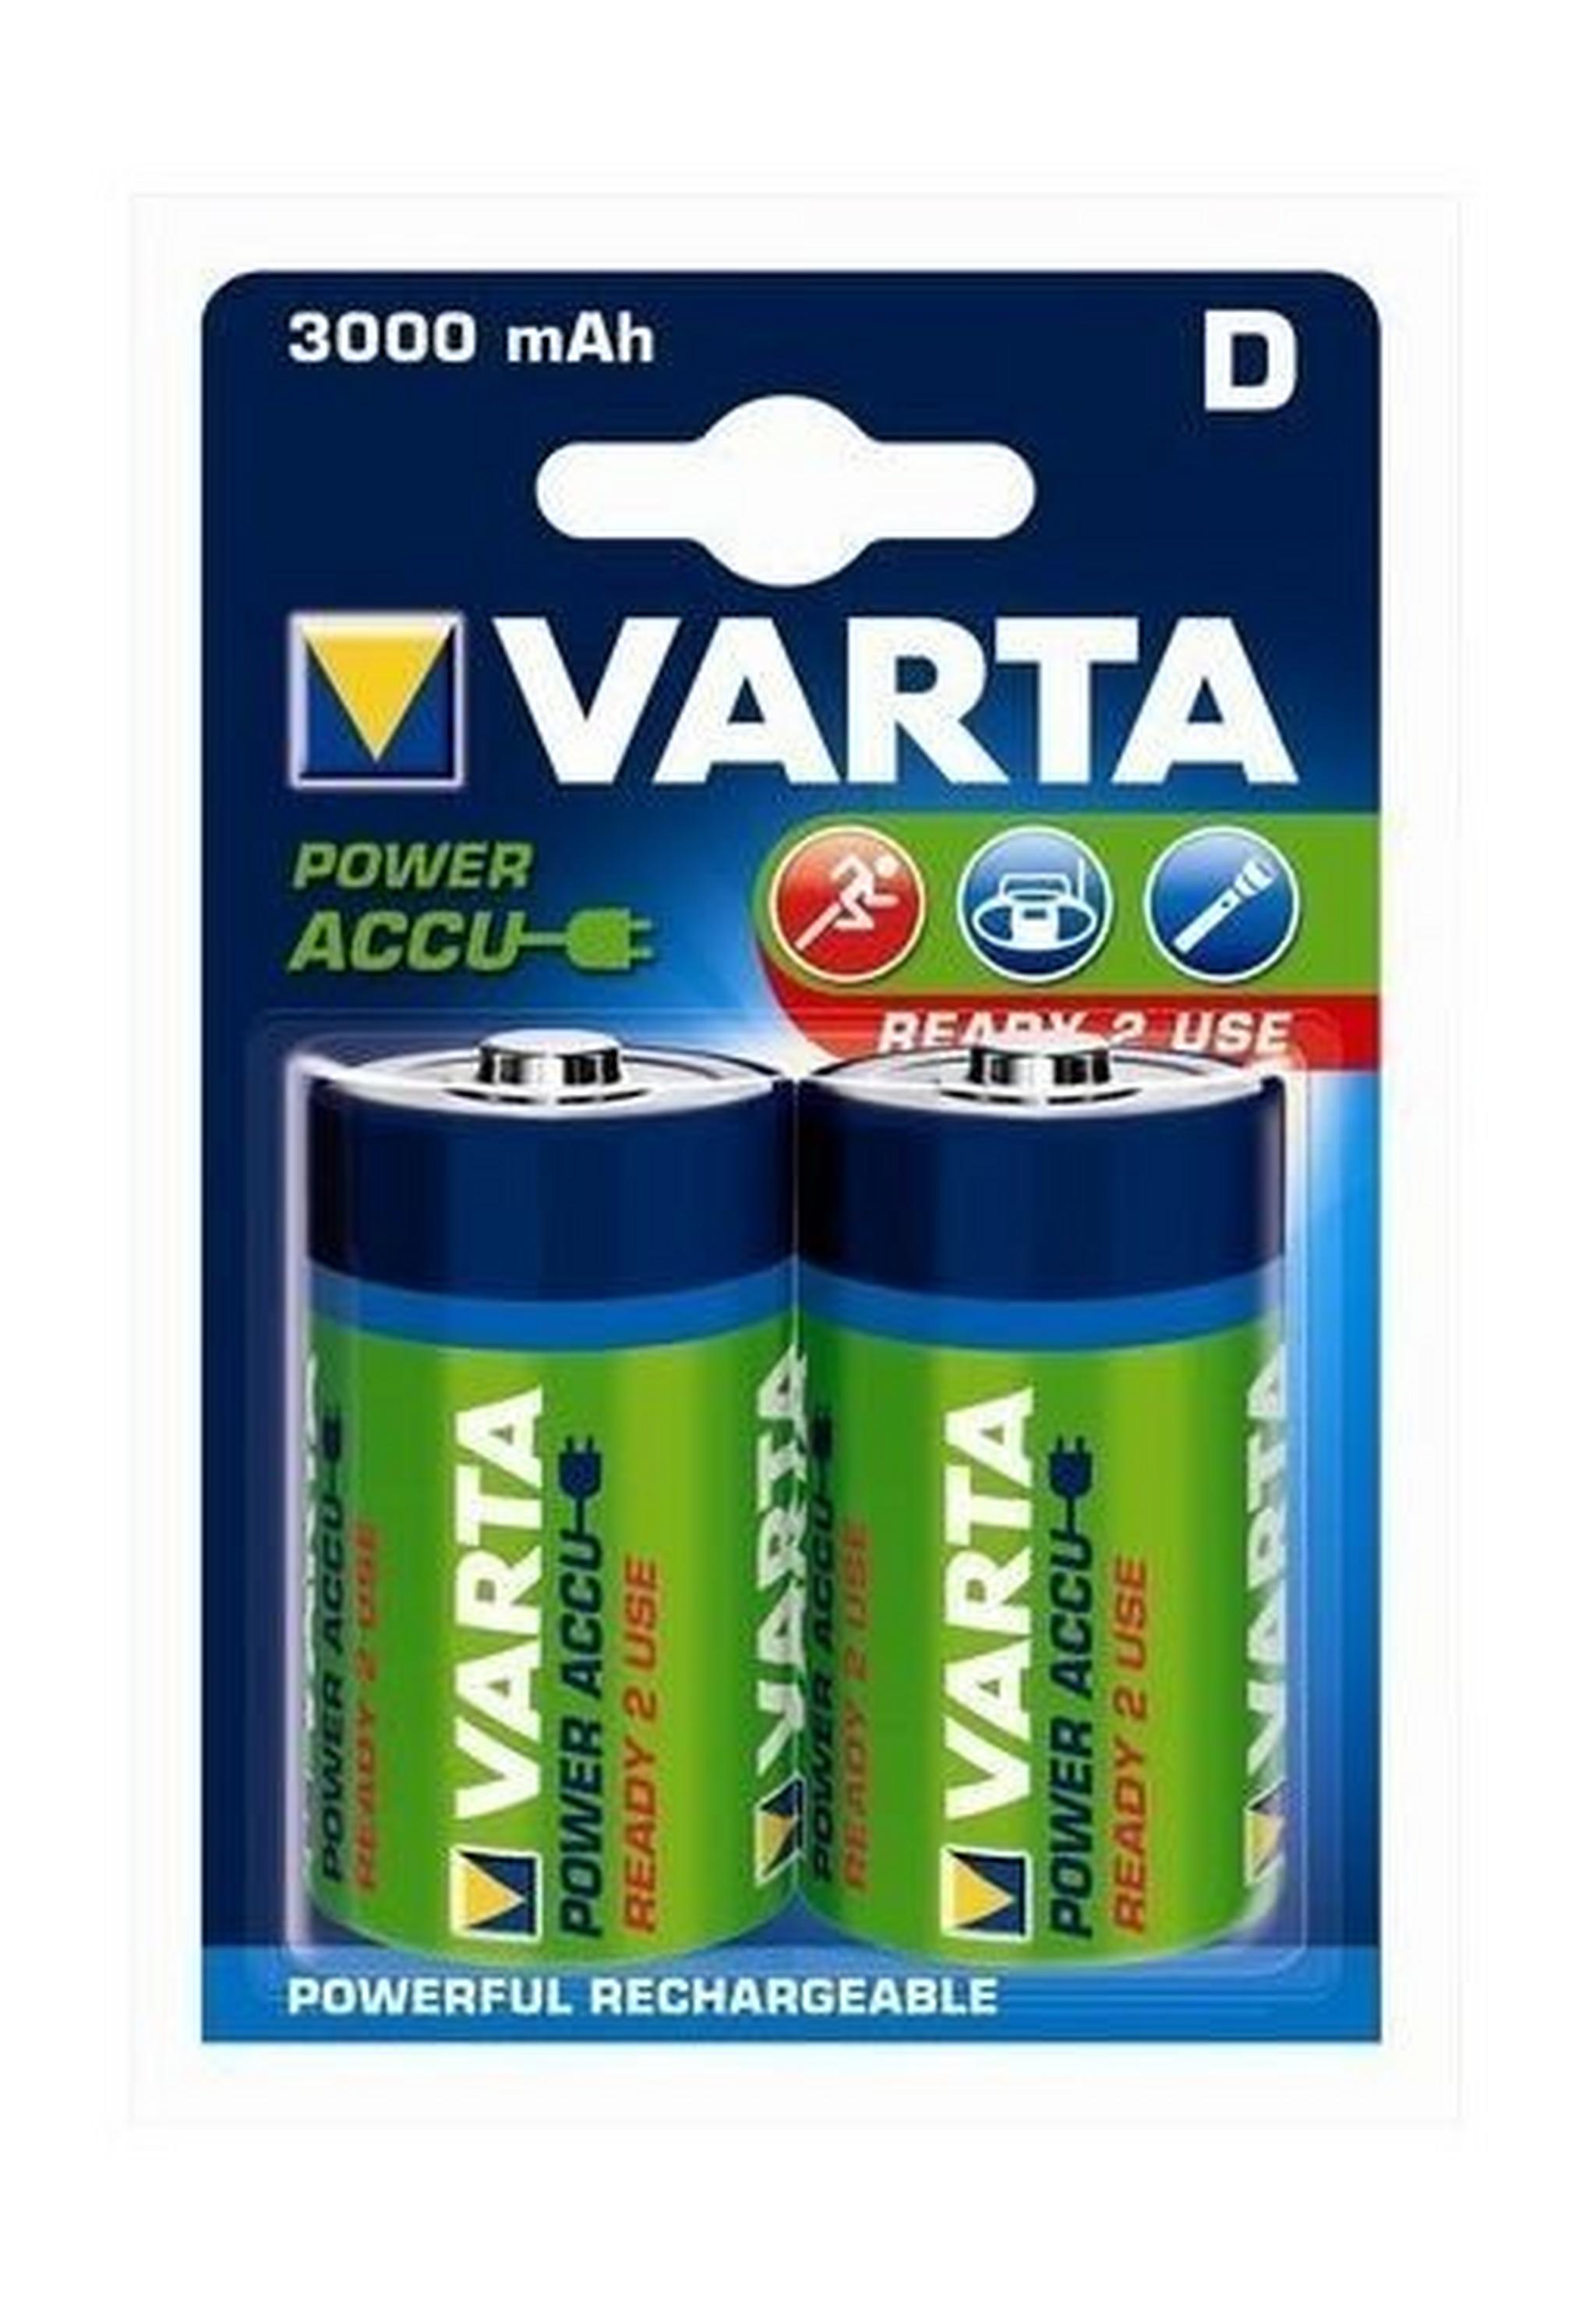 Varta Rechargeable ACCU 2D Nickel-Metal Battery 3000 mAh